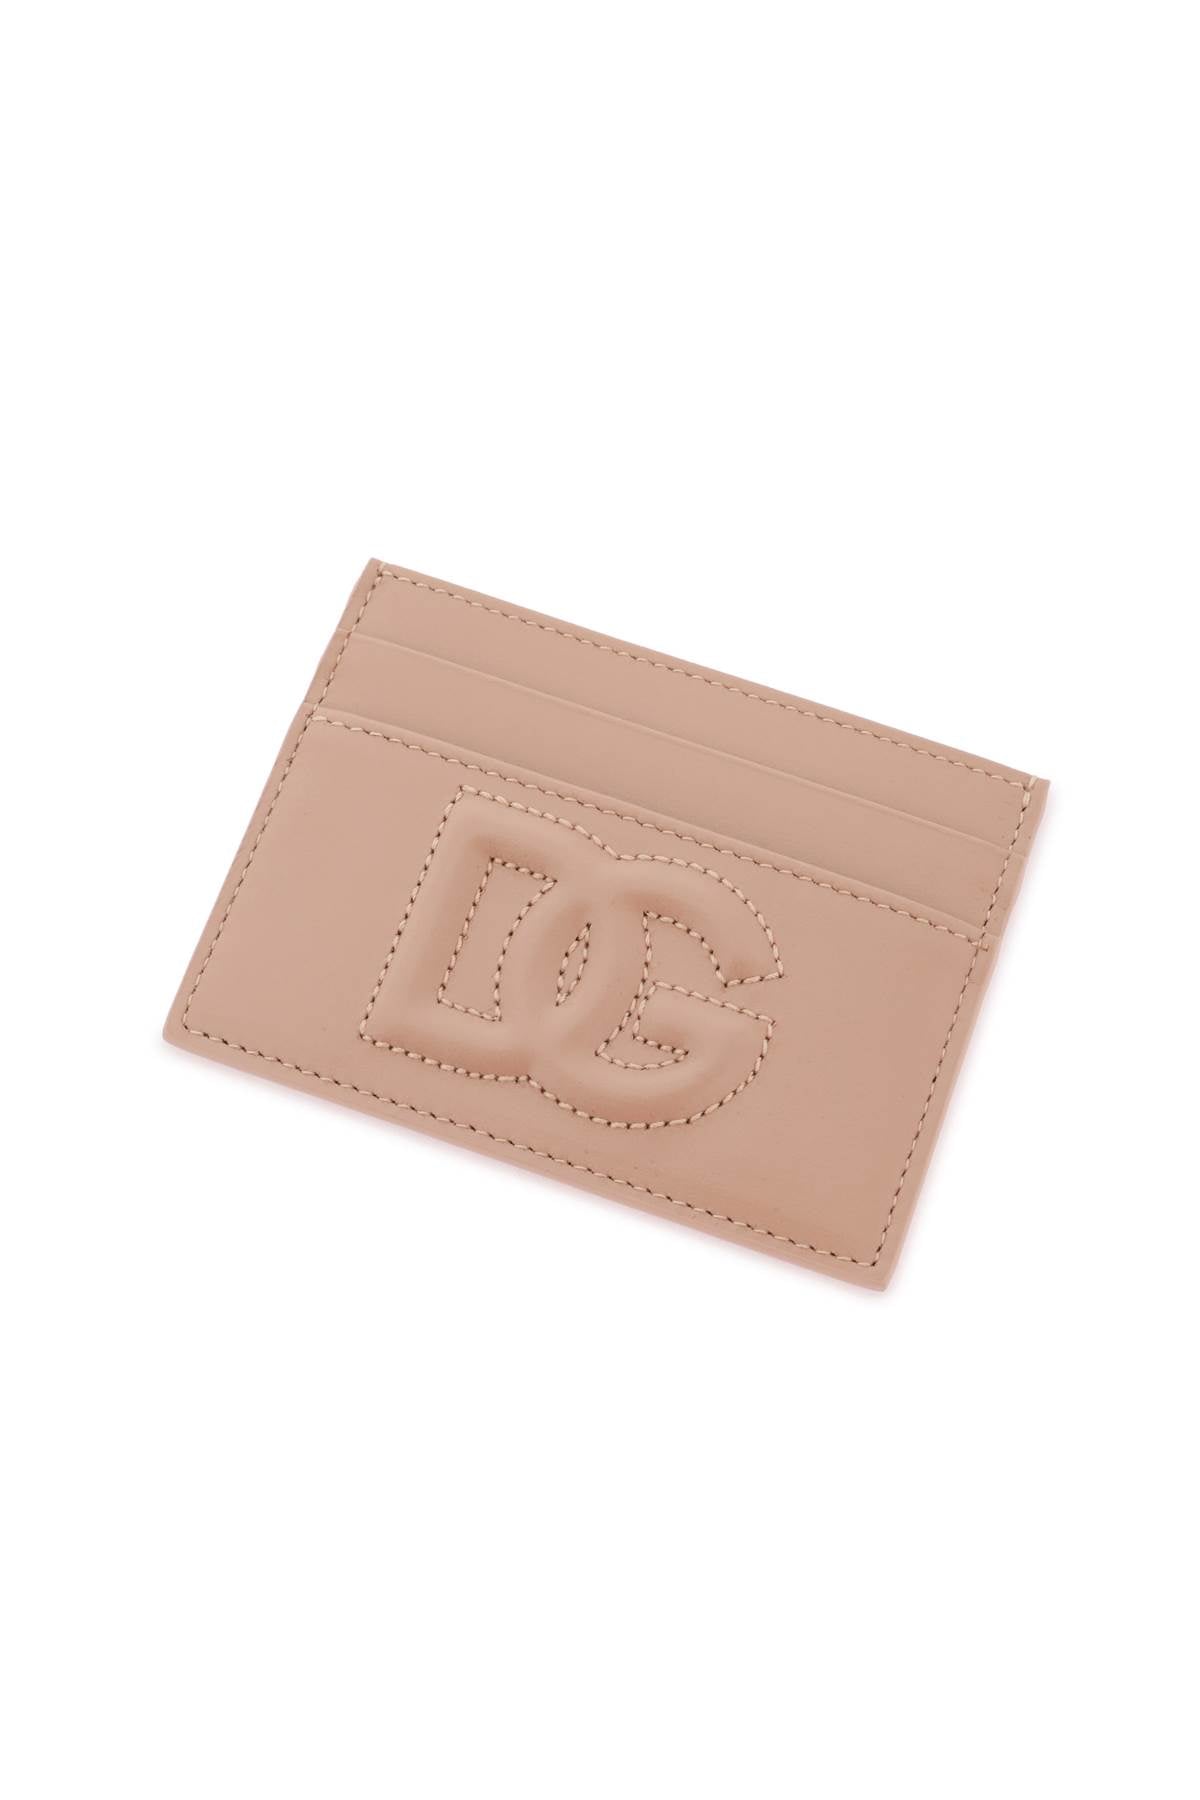 Dolce & gabbana dg logo cardholder-1